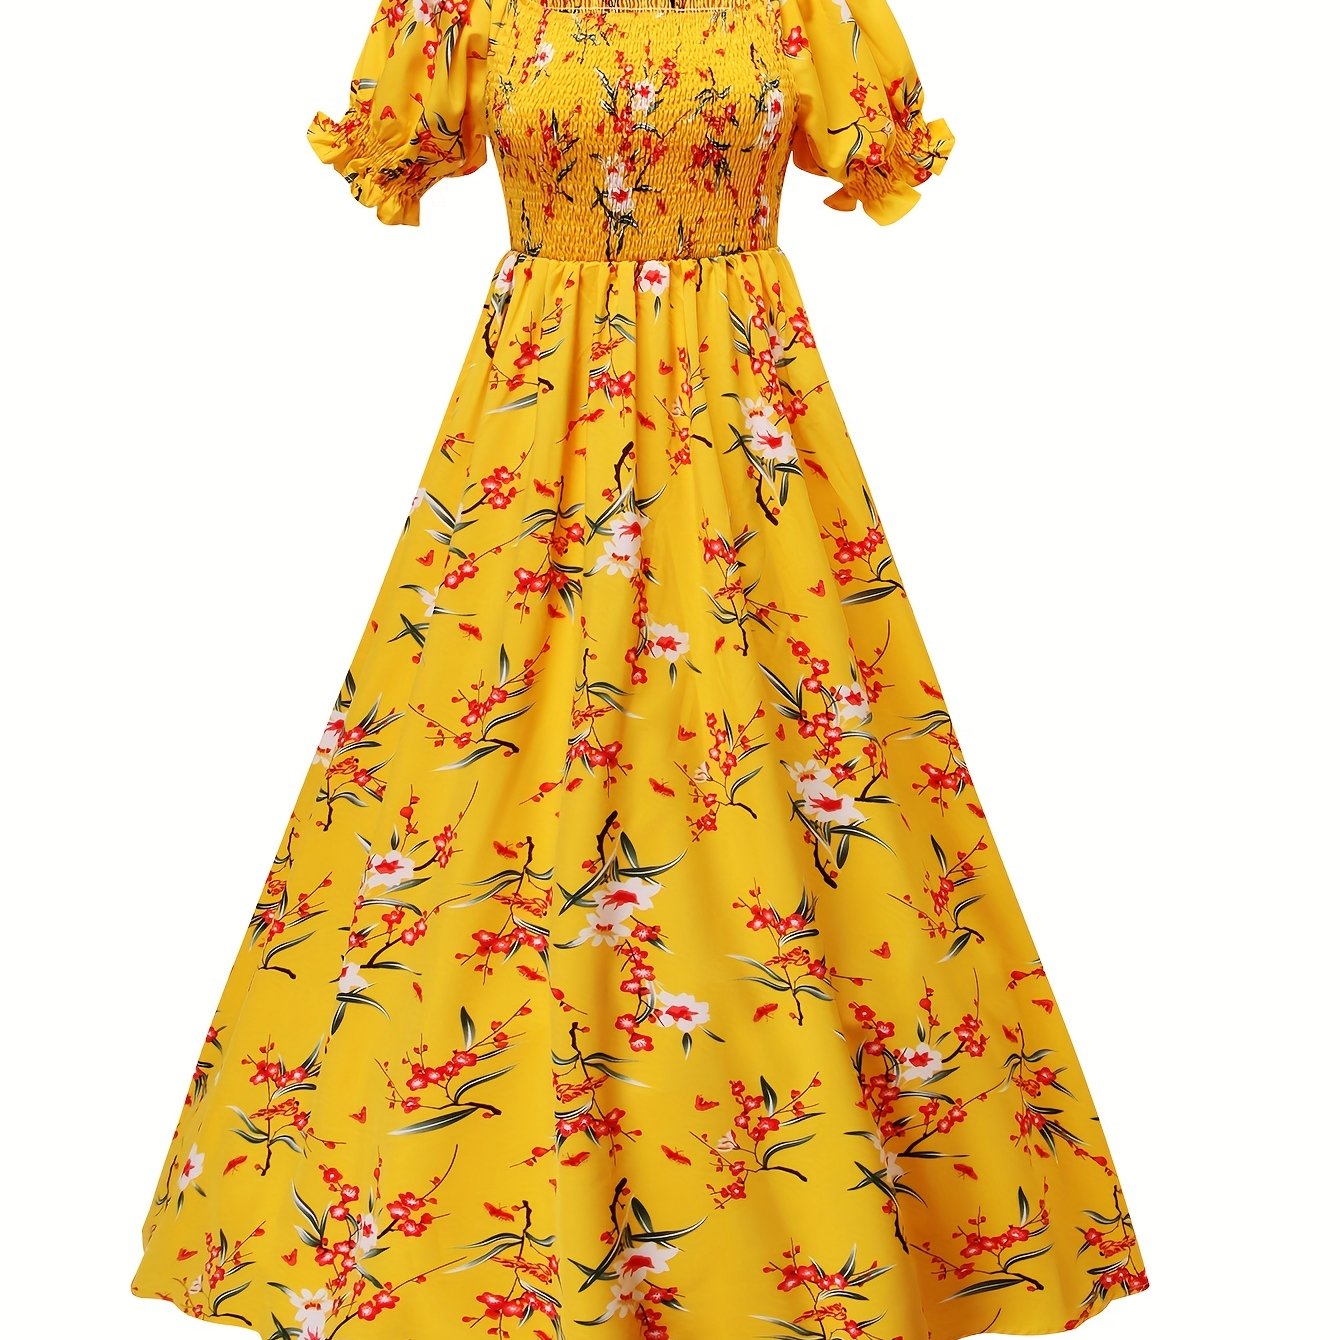 Floral Print Square Neck Shirred Dress For Spring & Summer, Elegant Short Sleeve Dress, Women's Clothing